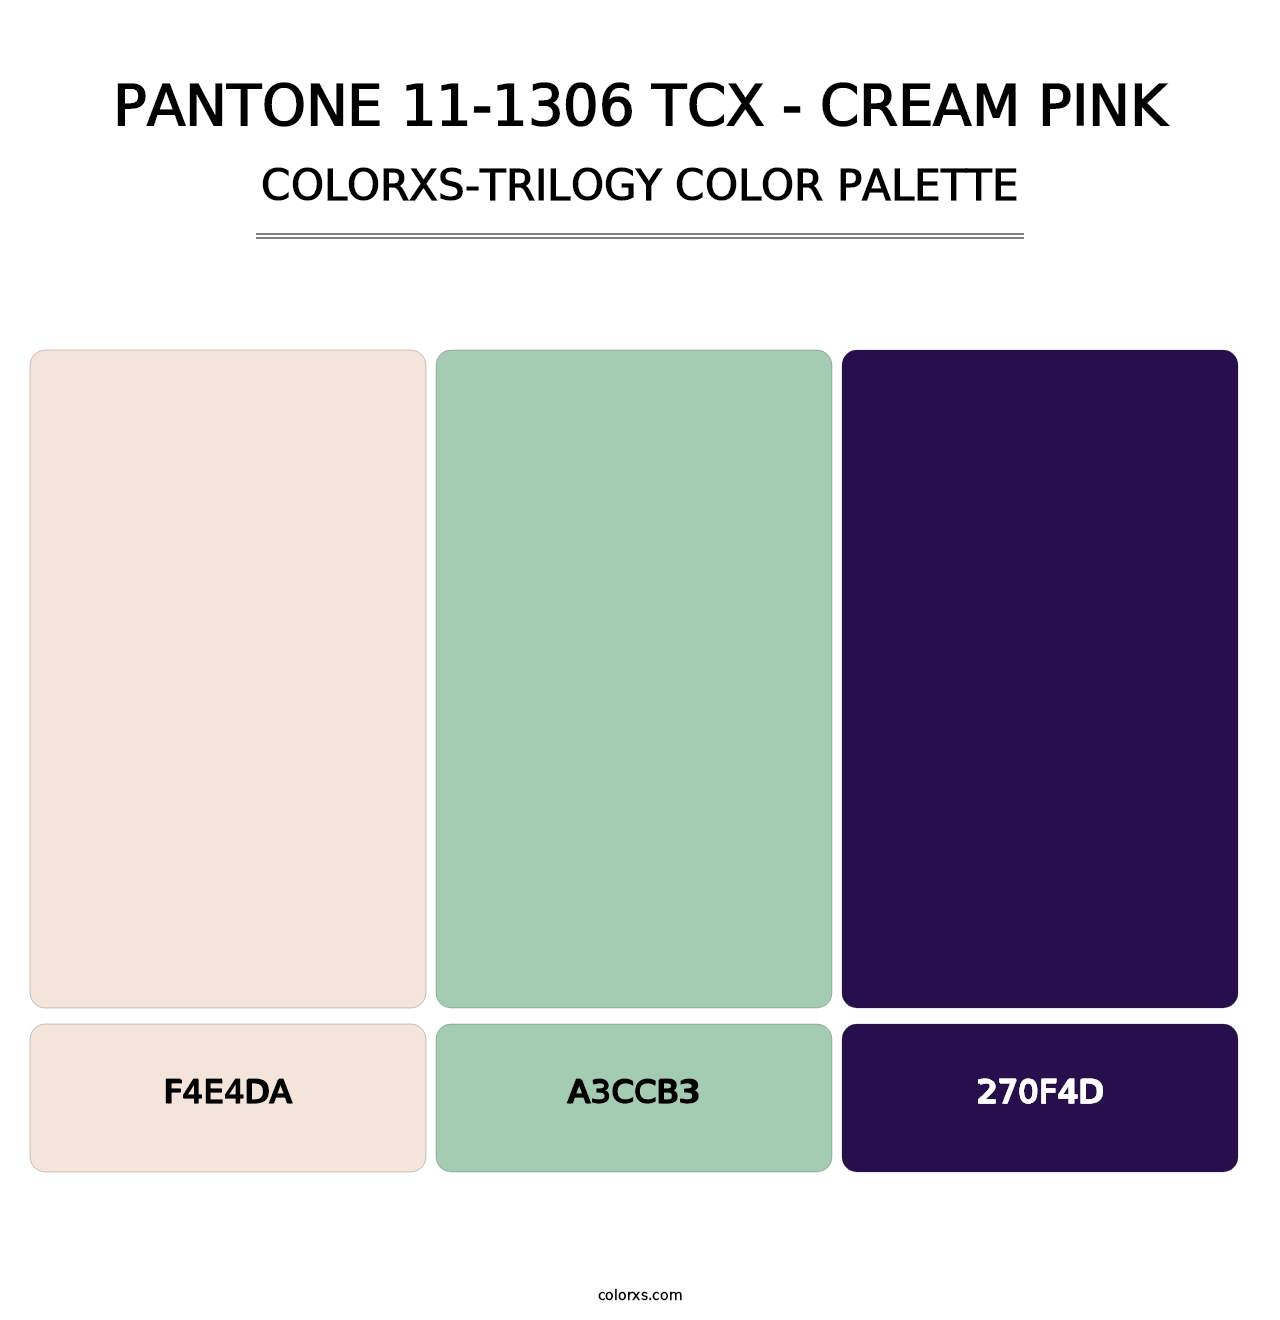 PANTONE 11-1306 TCX - Cream Pink - Colorxs Trilogy Palette